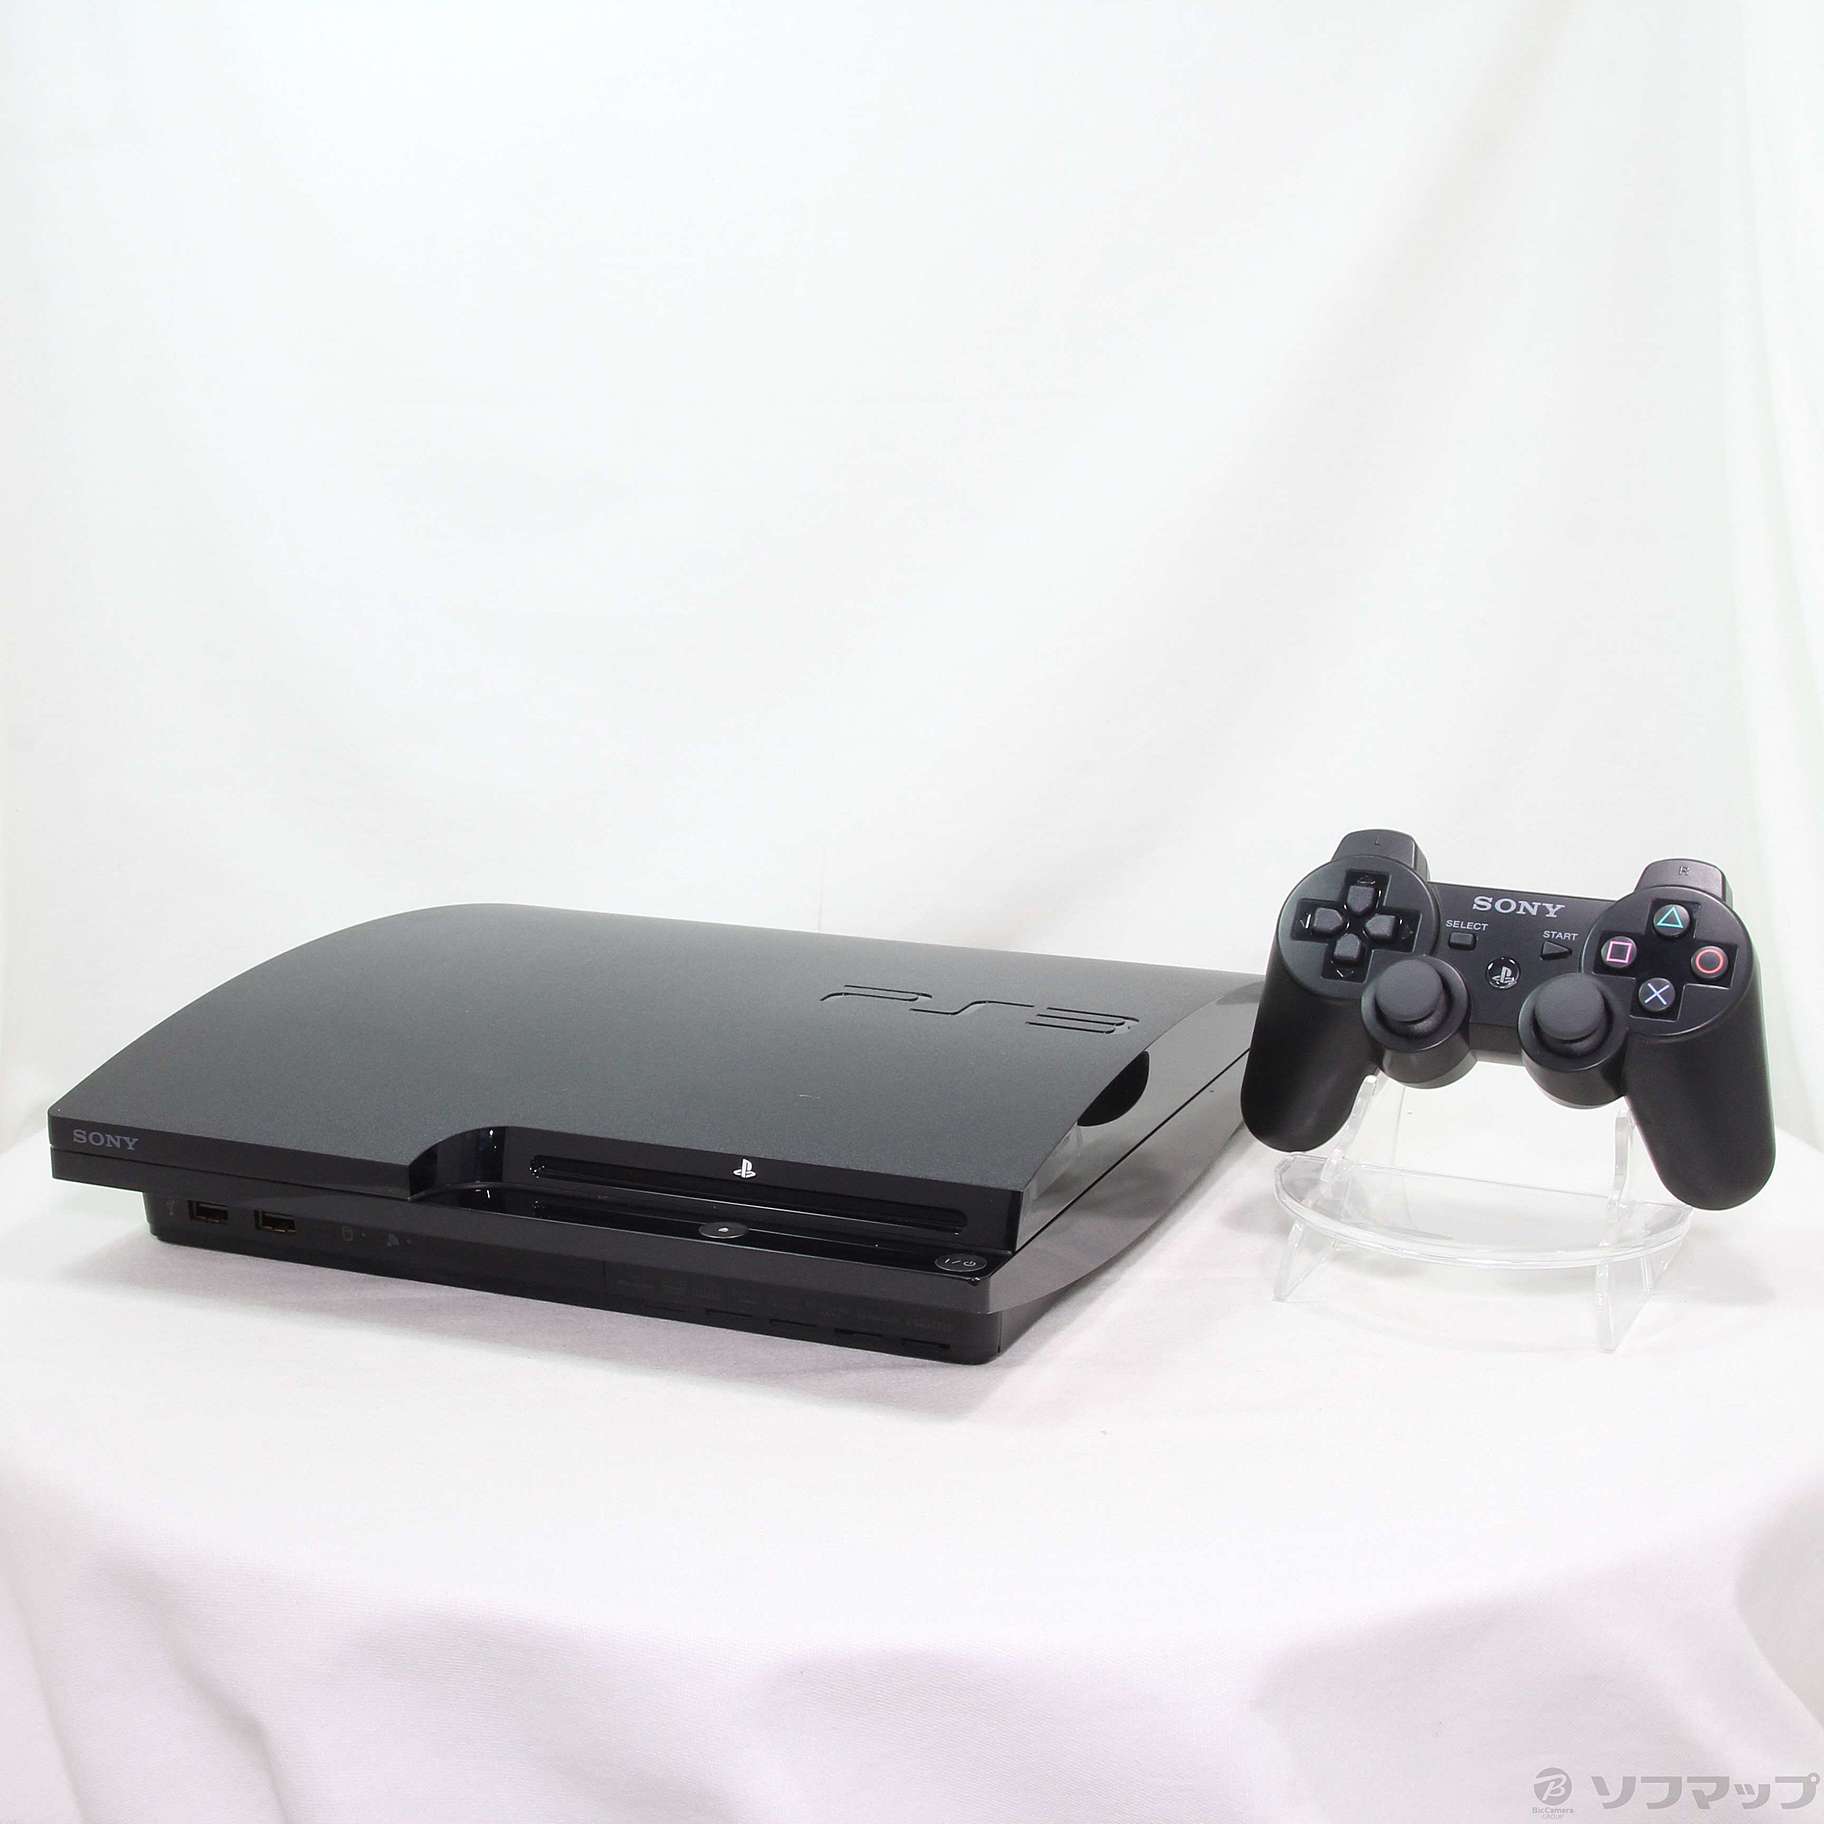 PlayStation3 CECH-2100A   120GBエンタメ/ホビー